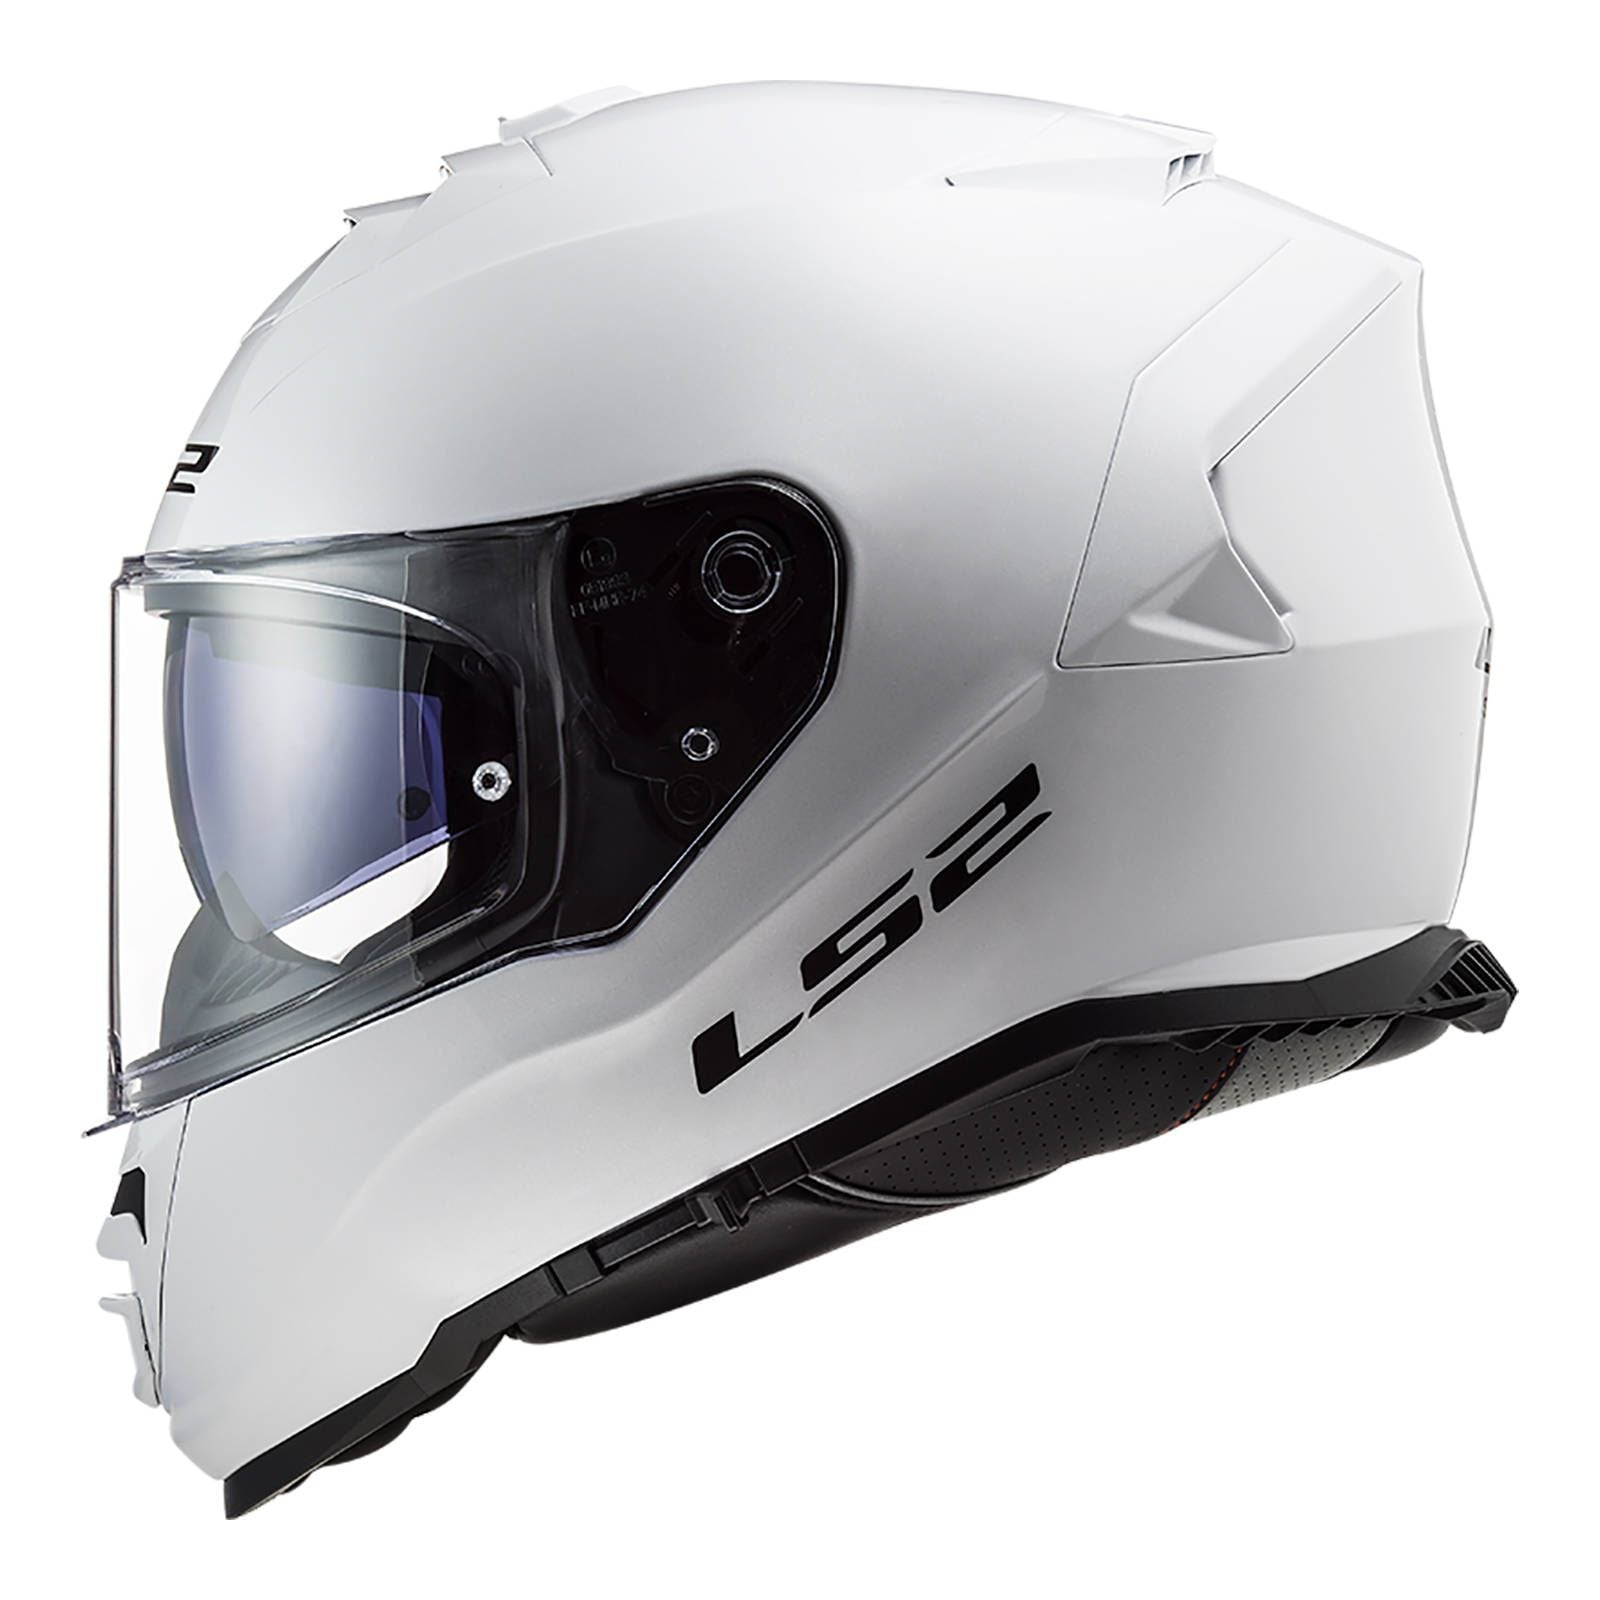 New LS2 FF800 Storm Helmet - White (XL) #LS2FF800SOLWHXL